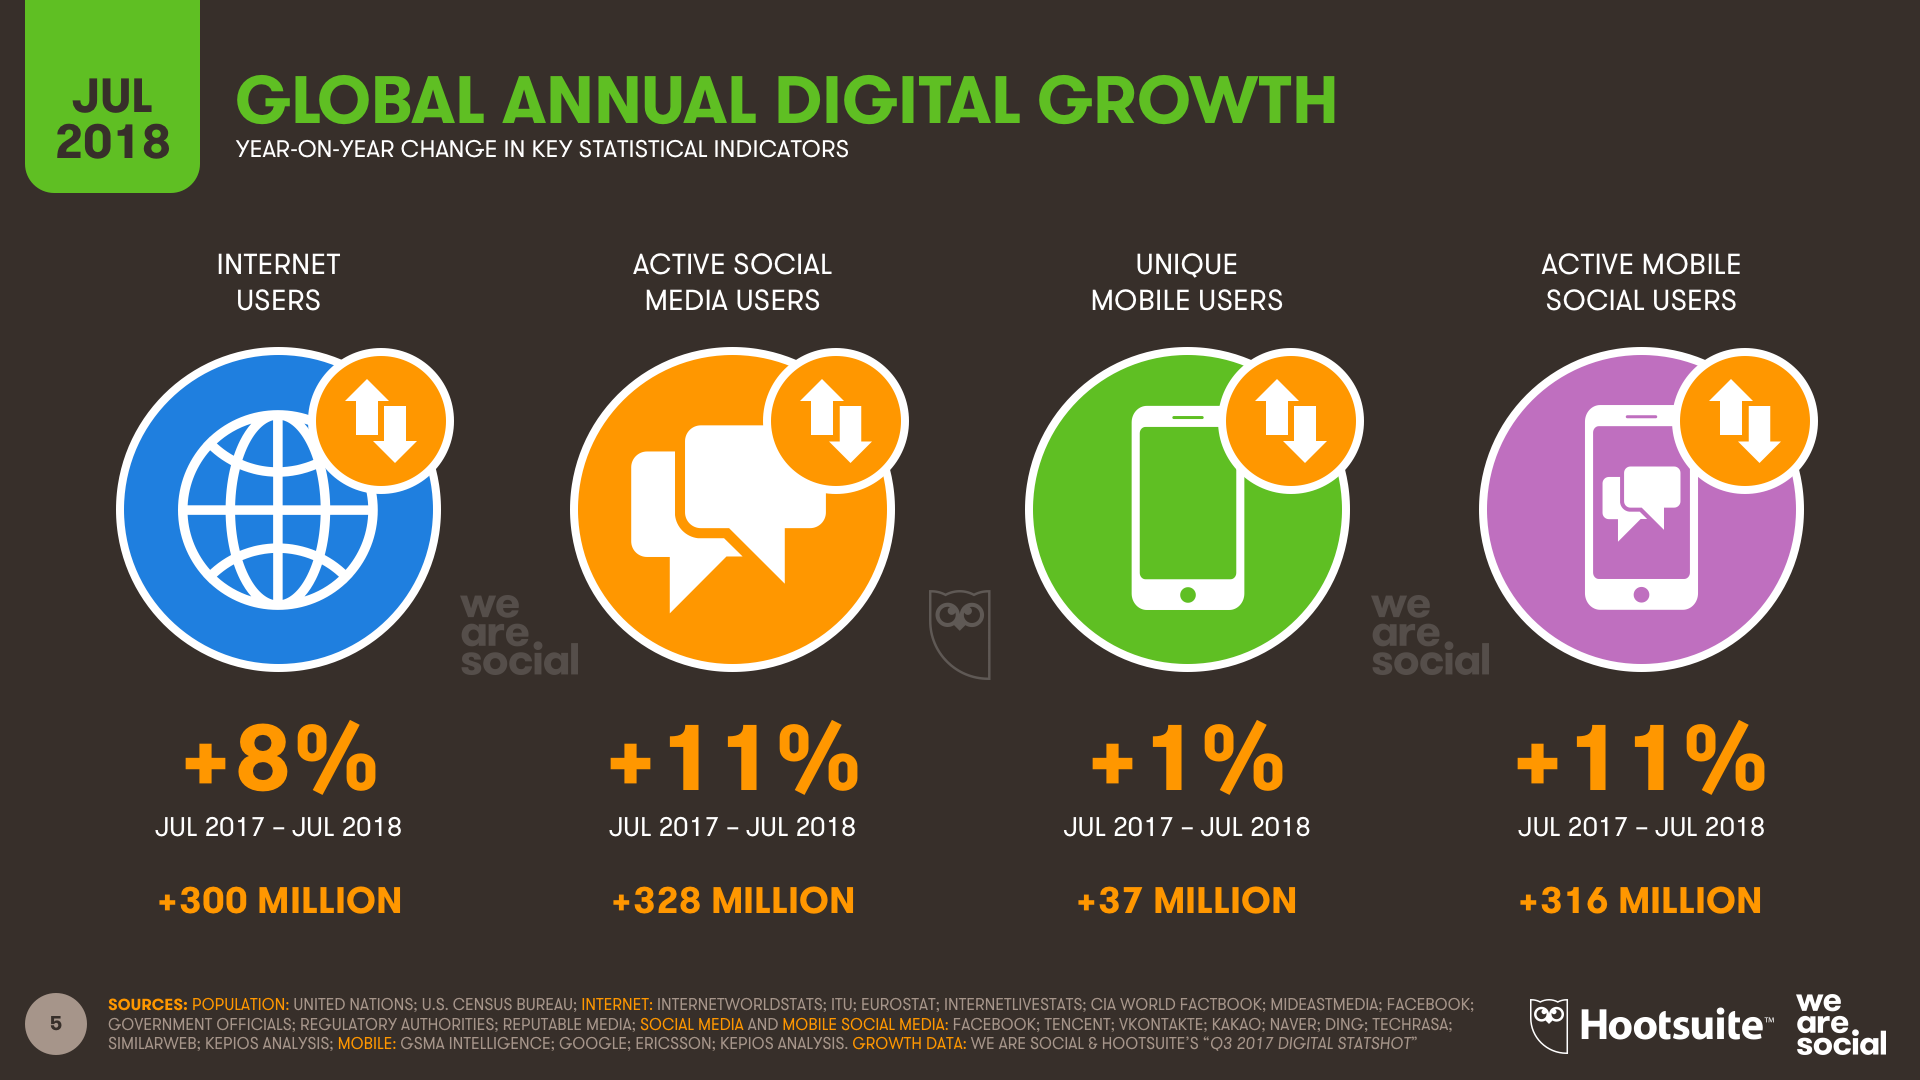 Q3 2018 - Digital Annual Growth